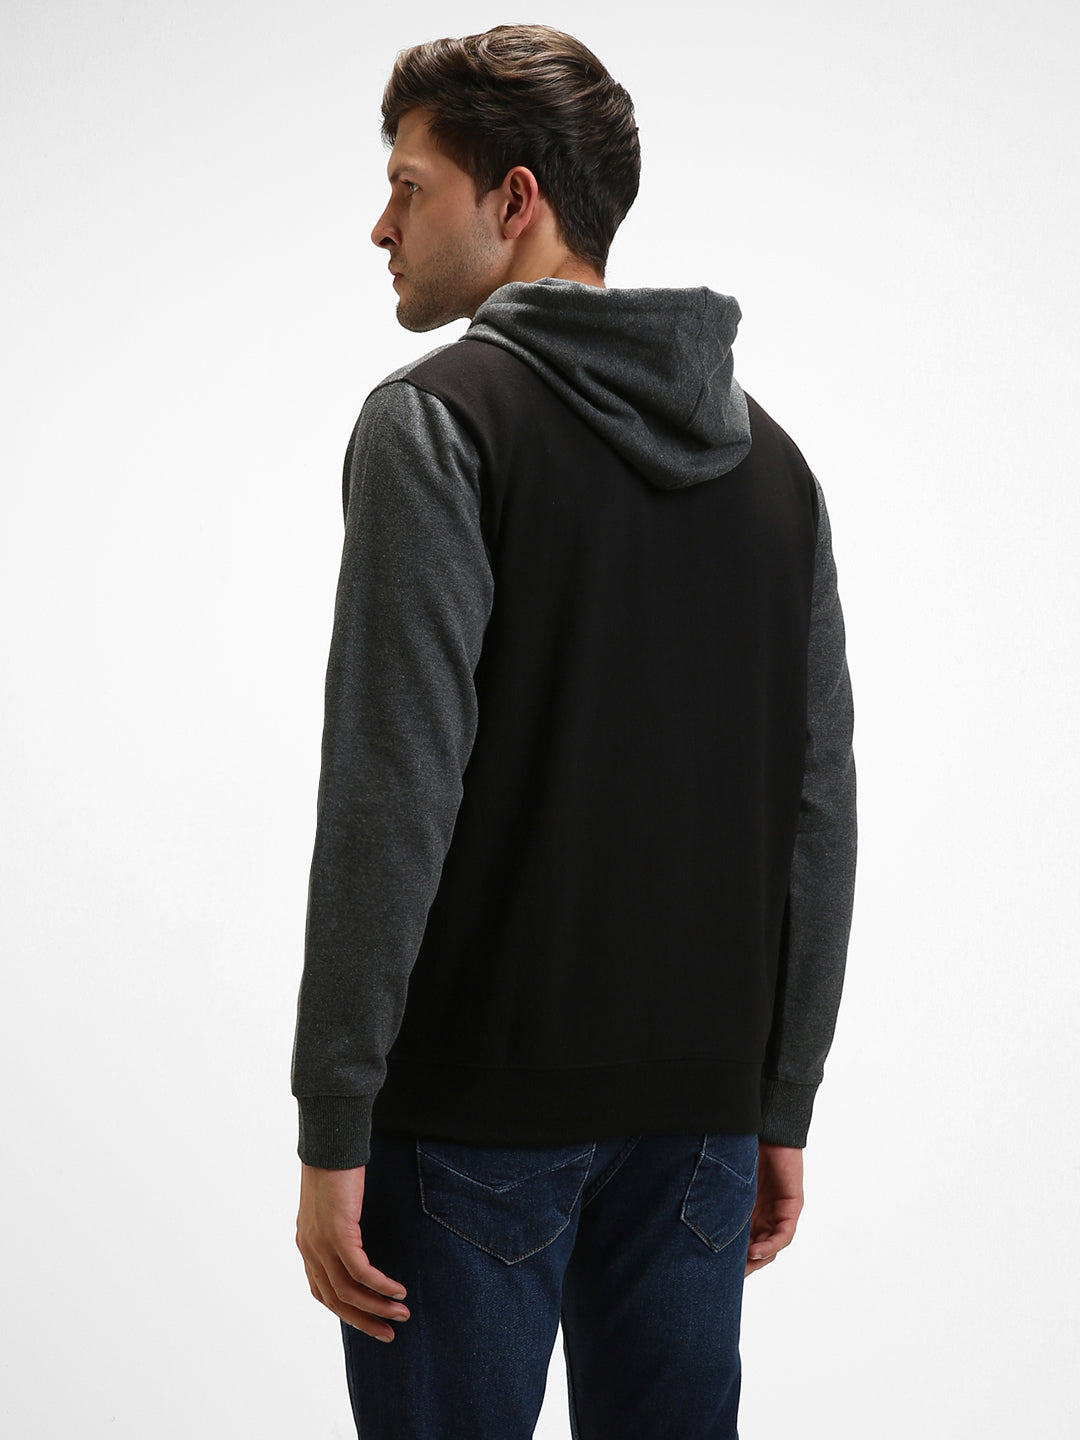 Dennis Lingo Men's Dark Grey  Full Sleeves Zipper hoodie Sweatshirt